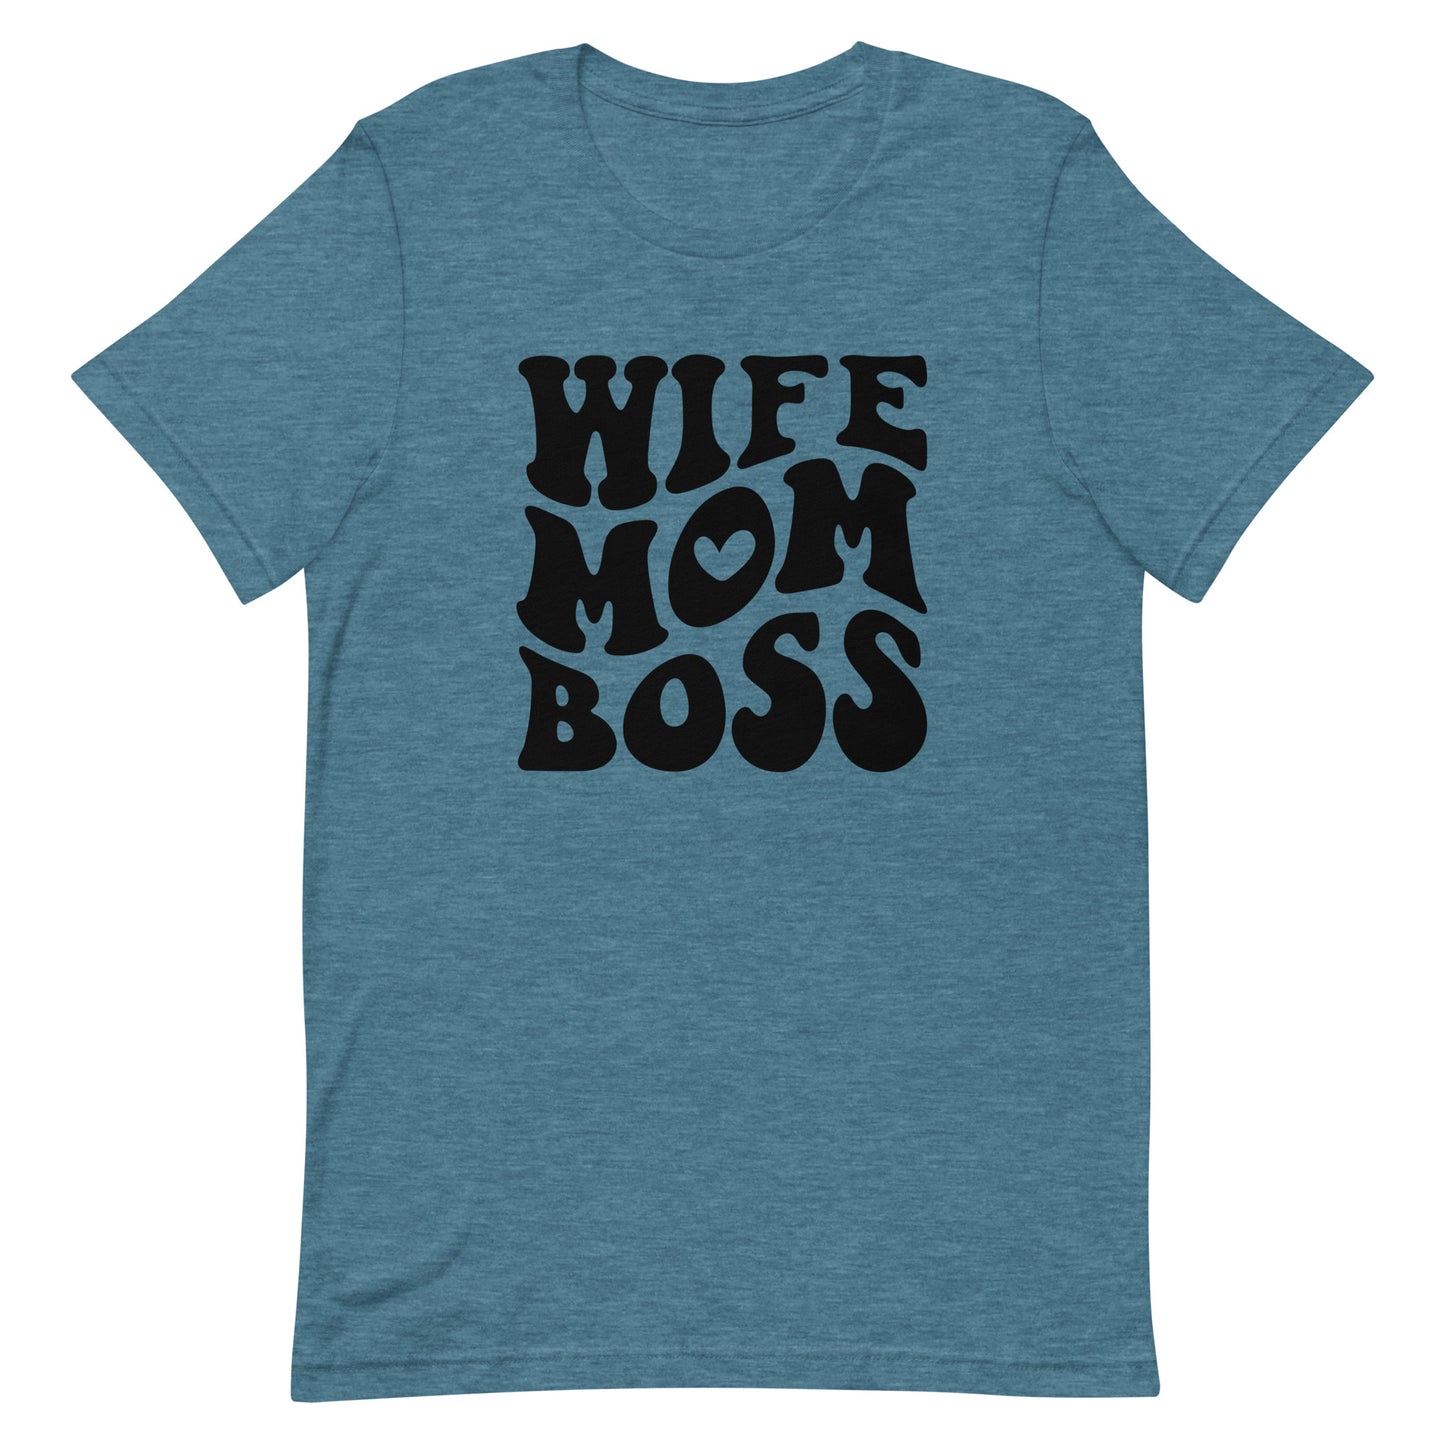 WIFE MOM BOSS - Unisex t-shirt